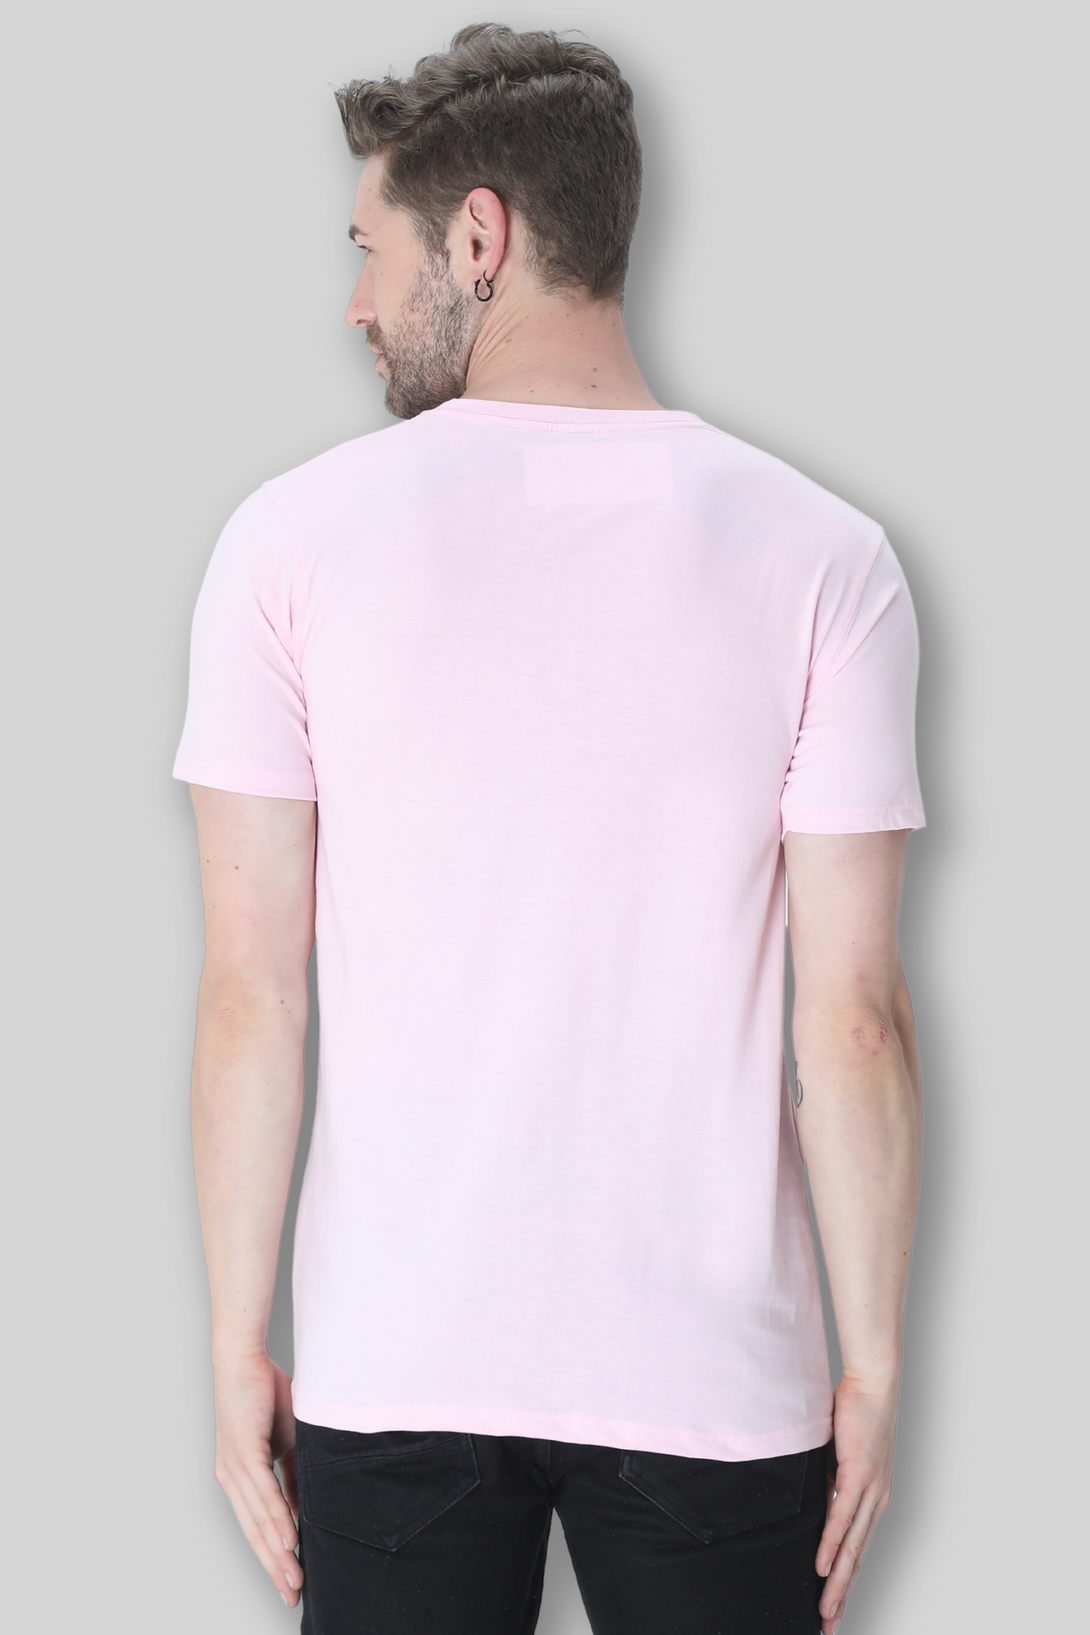 Light Baby Pink T Shirt For Men - WowWaves - 3